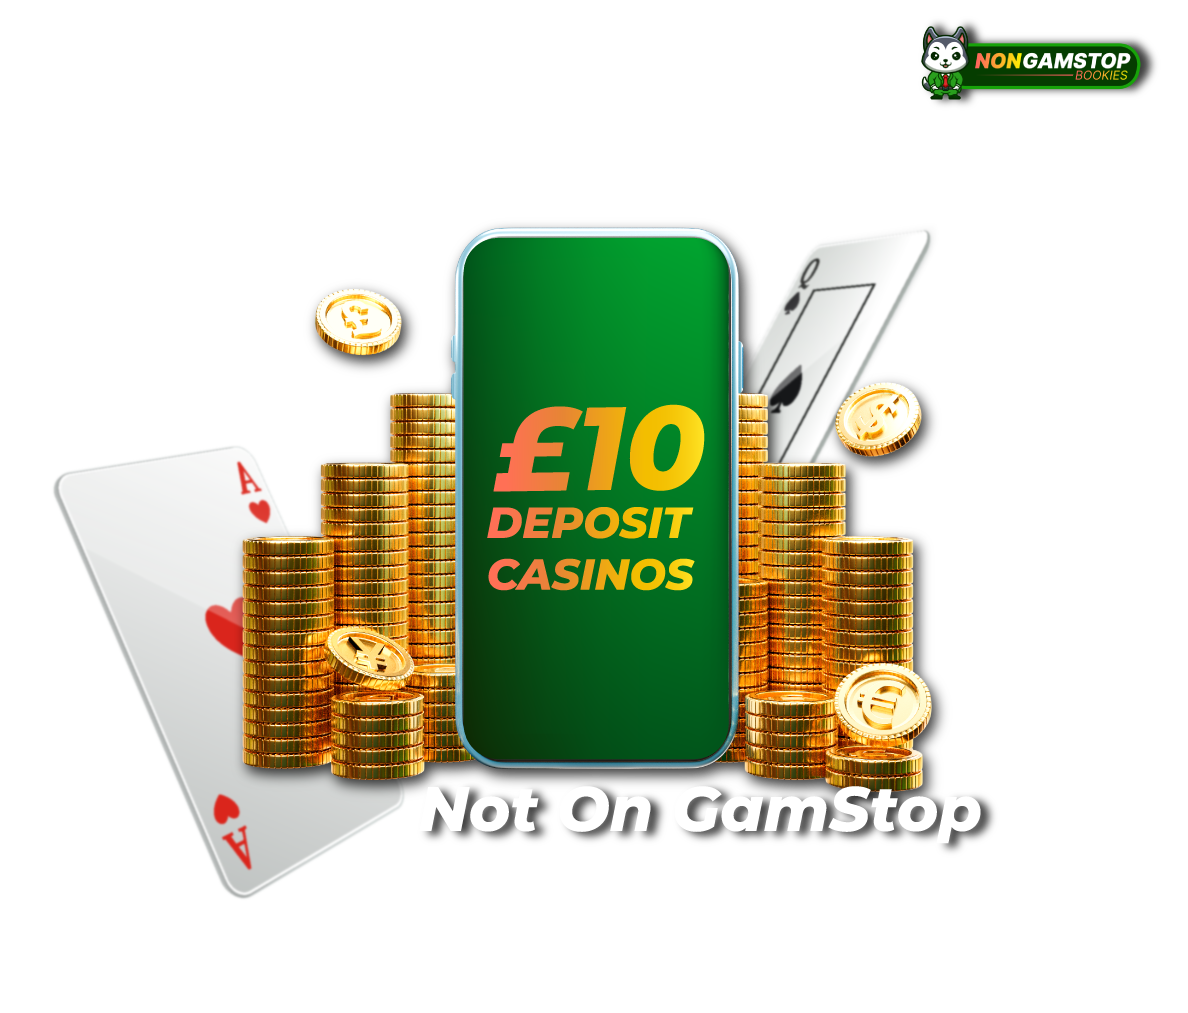 £10 Deposit Casinos Not On GamStop